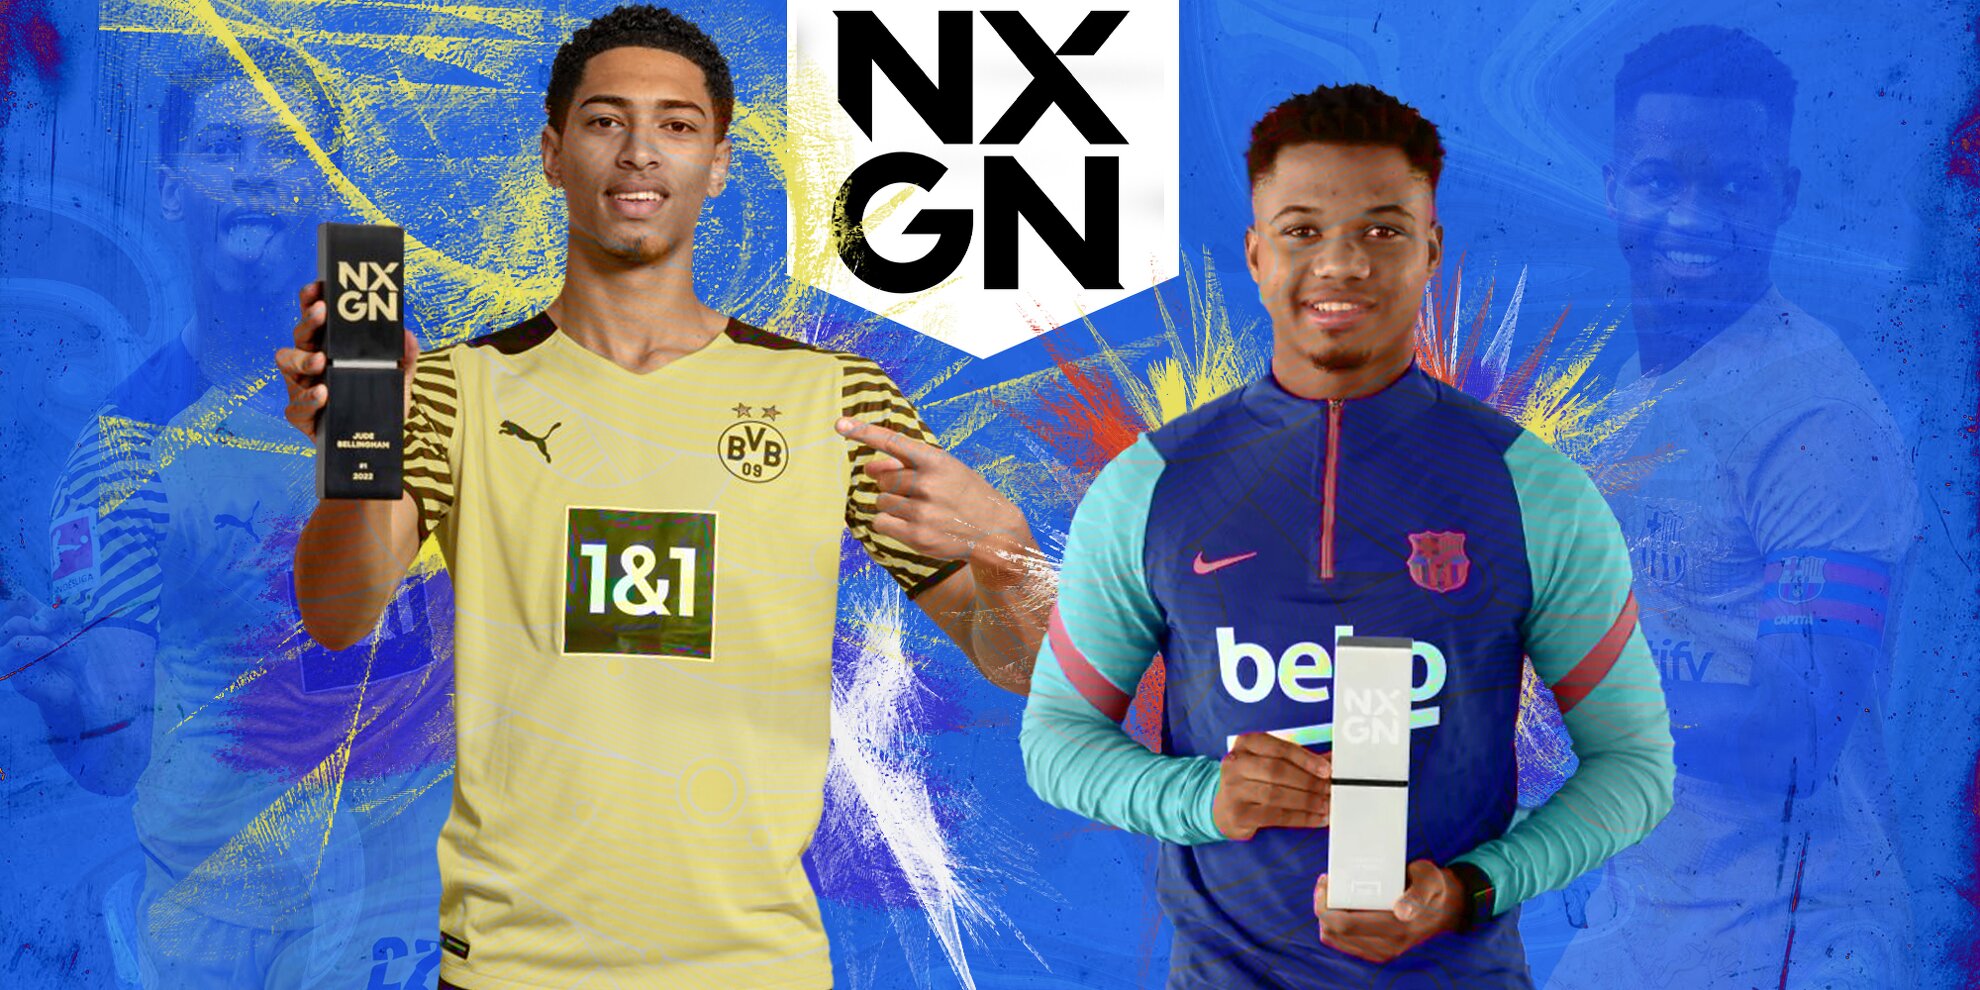 NXGN winners